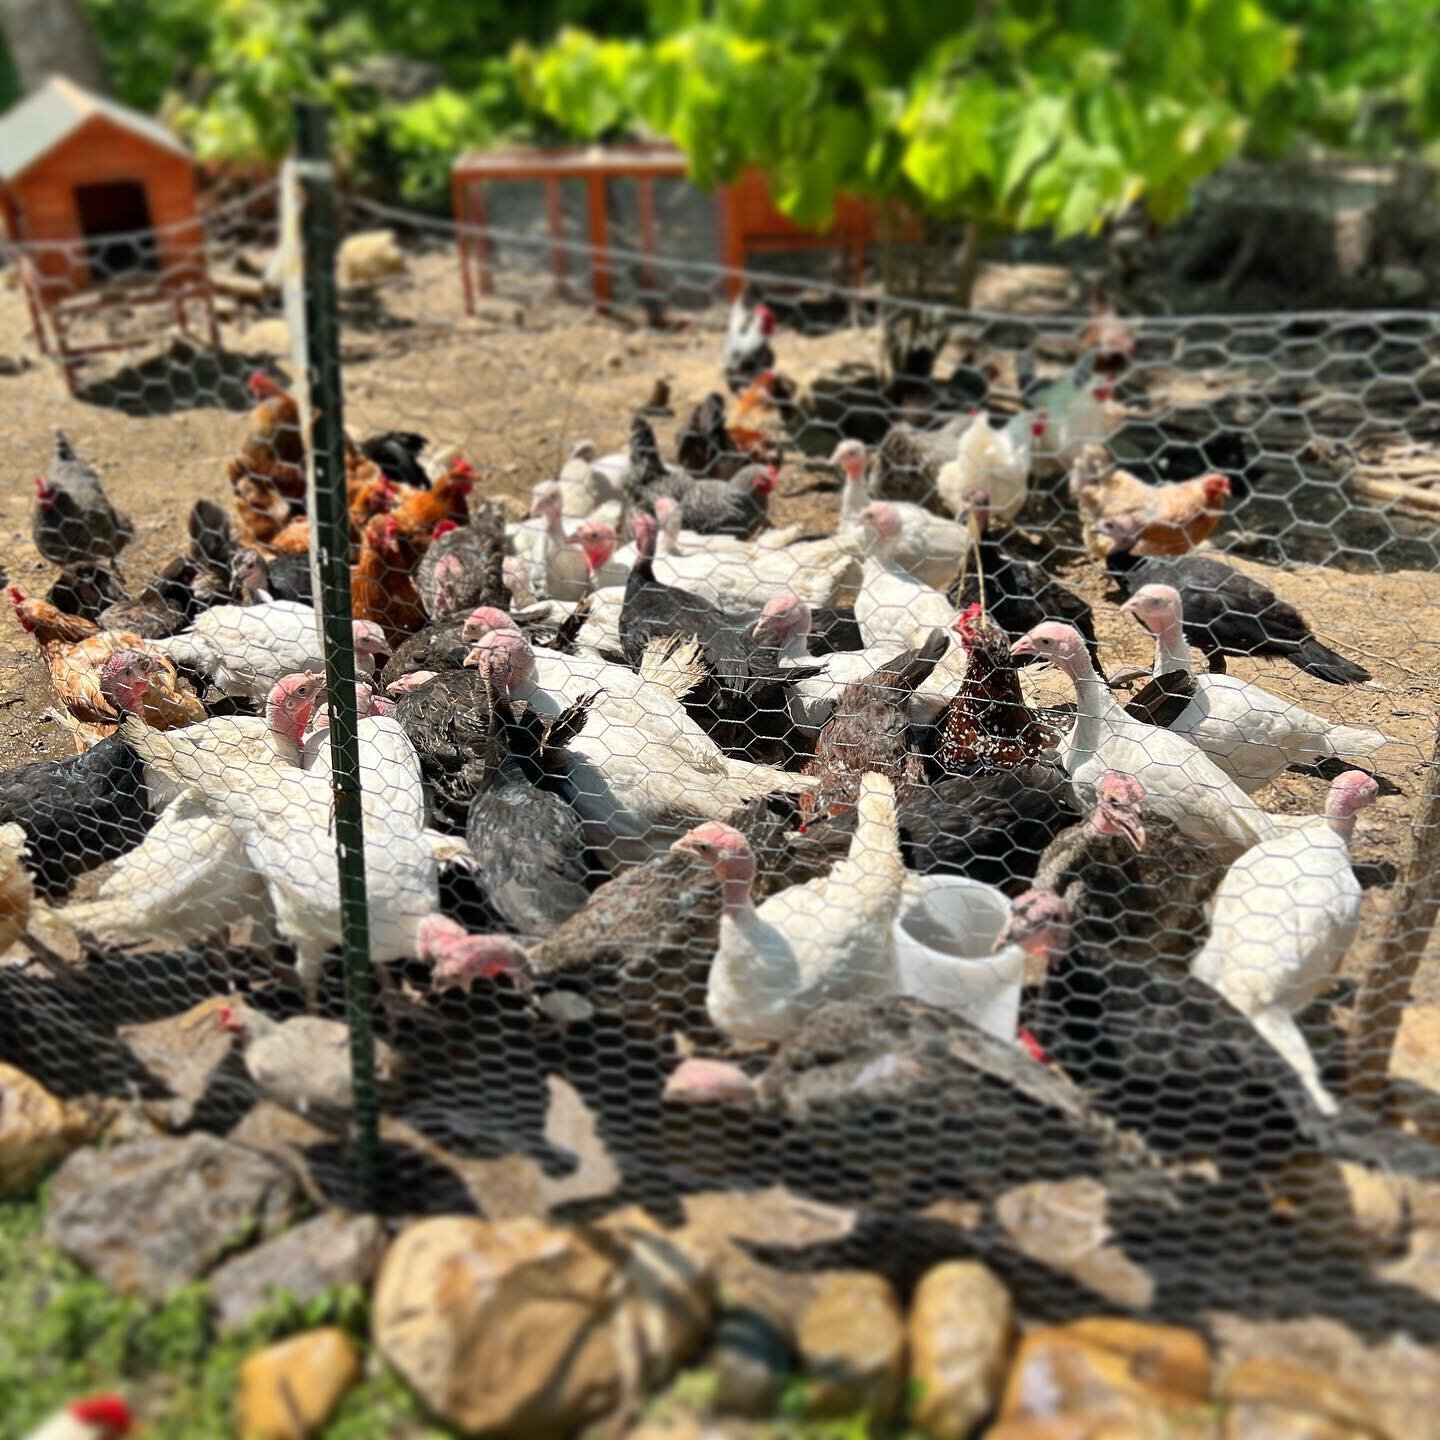 Hot sunny day means traffic jam at the water bowl! 

#turkeys #chickens #farm #garden #regenerative #sustainable #homestead #farmlife #animals #farmanimals #reels